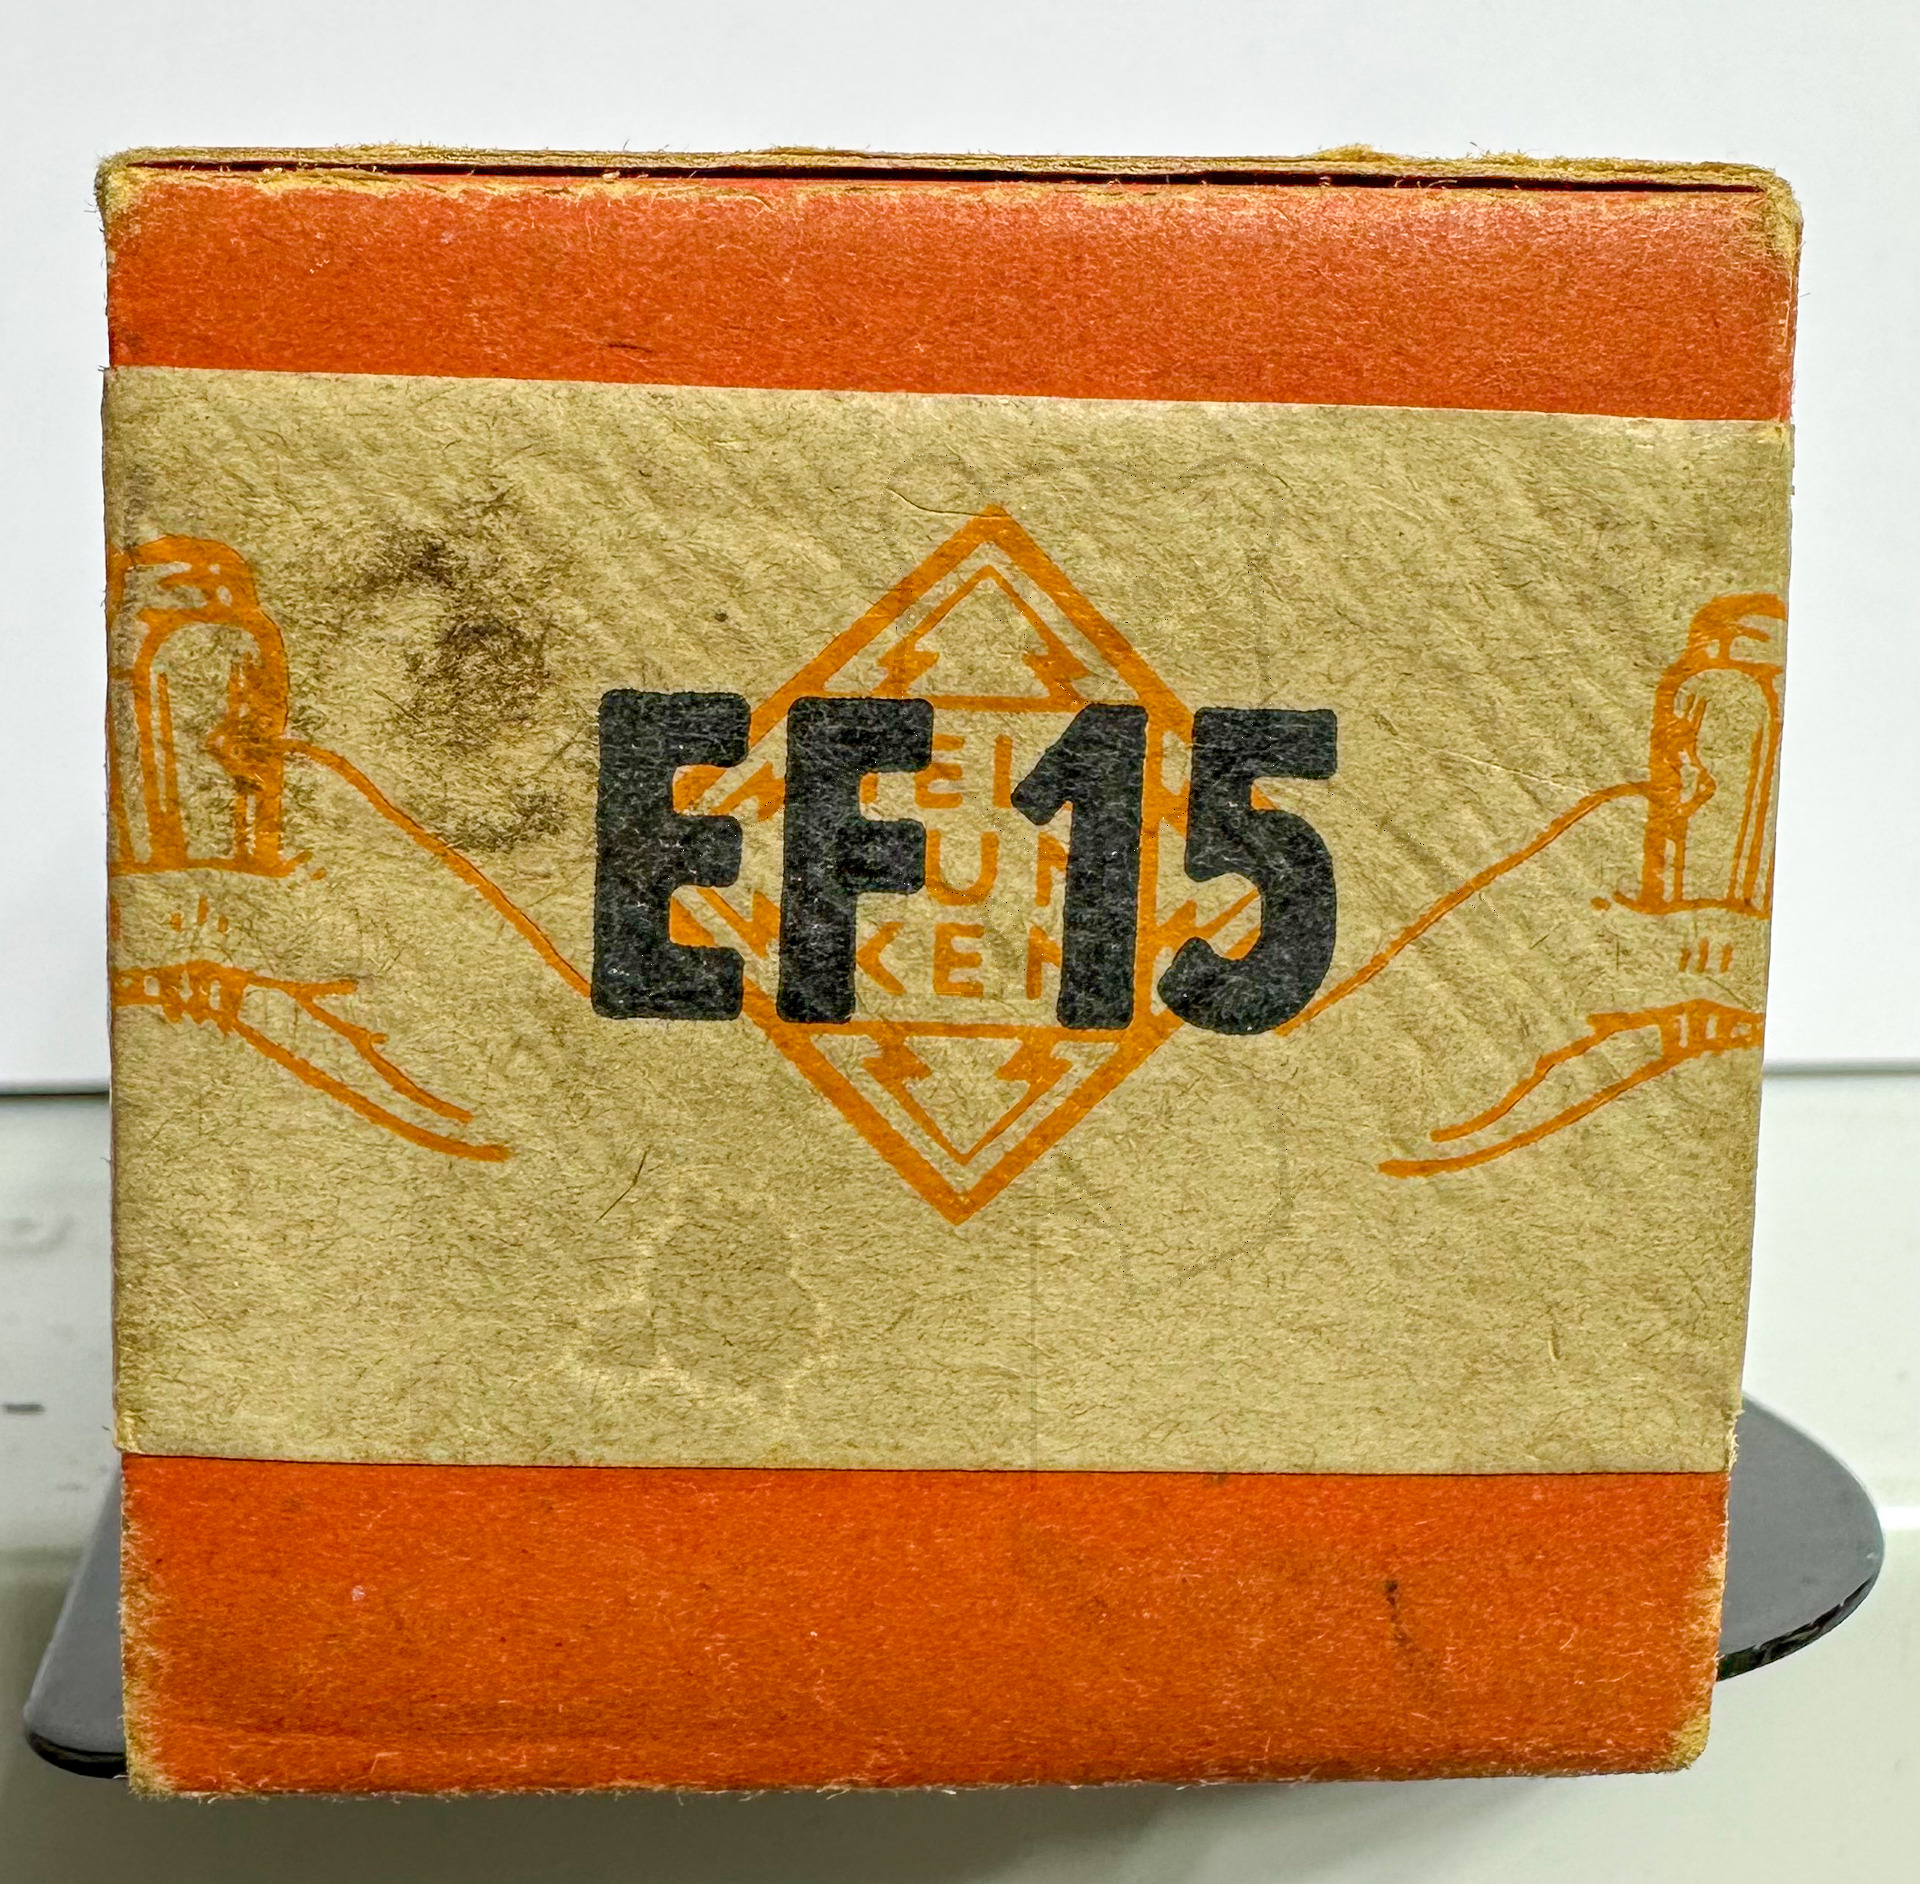 Röhre EF15 #3624 Verpackung Bild 1